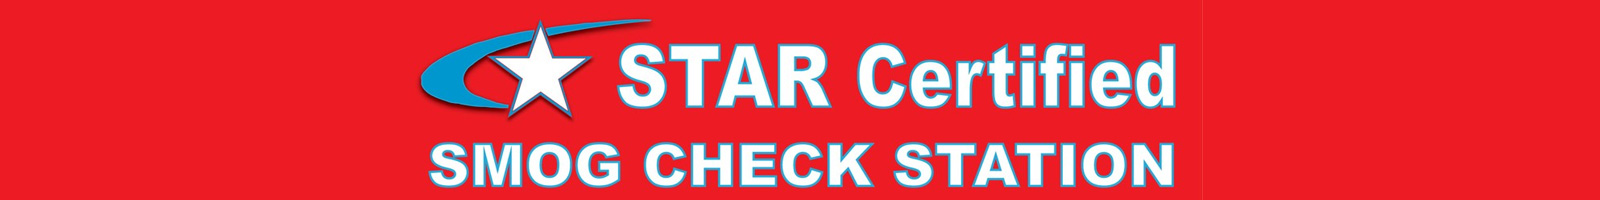 Badge - STAR Certified Smog Check Station